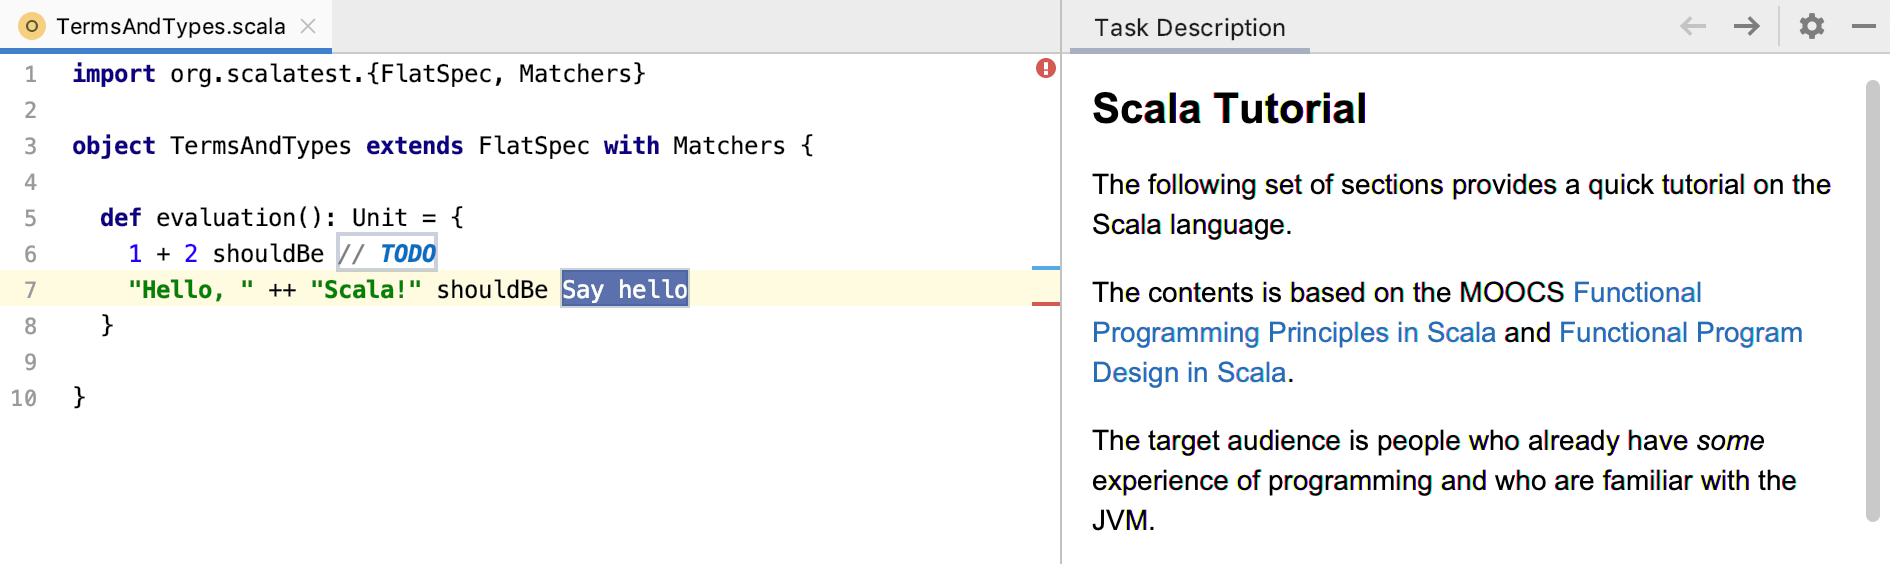 edu task description scala tutorial png